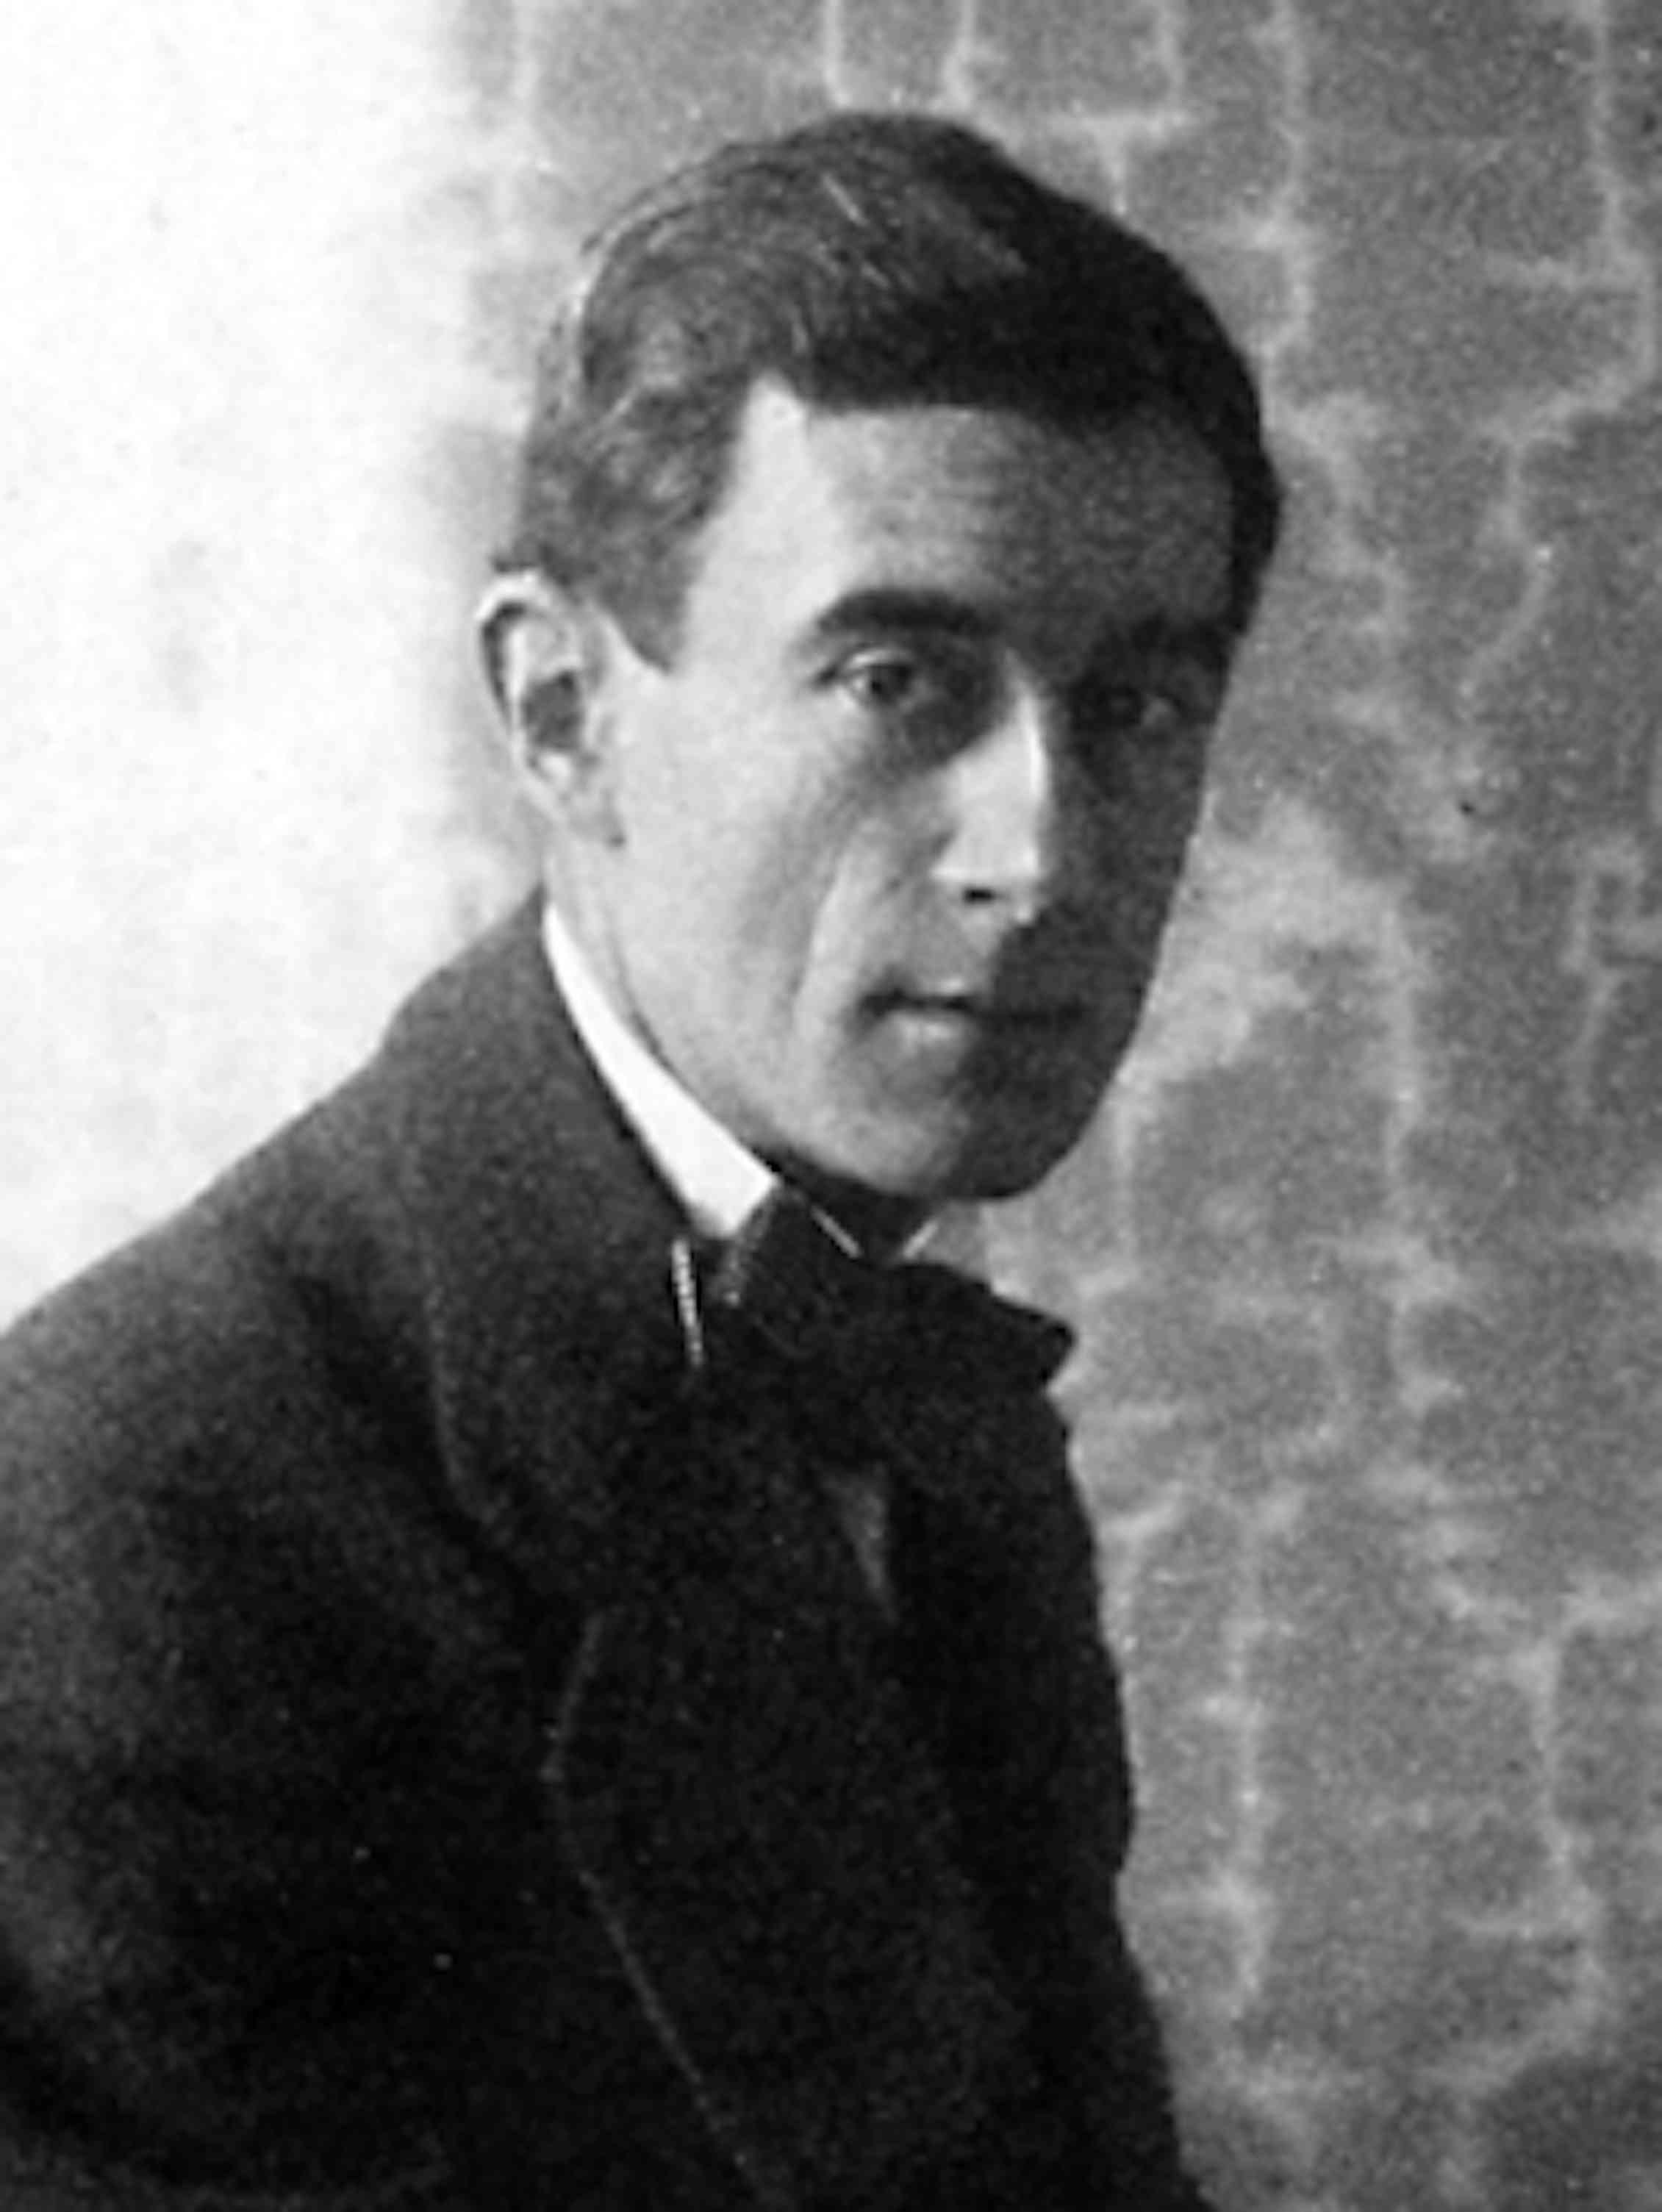 Рав ел. Морис Равель. Maurice Ravel (1875-1937). Жозеф Морис Равель (фр. Joseph-Maurice Ravel, 1875—1937). Морис Равель портрет.